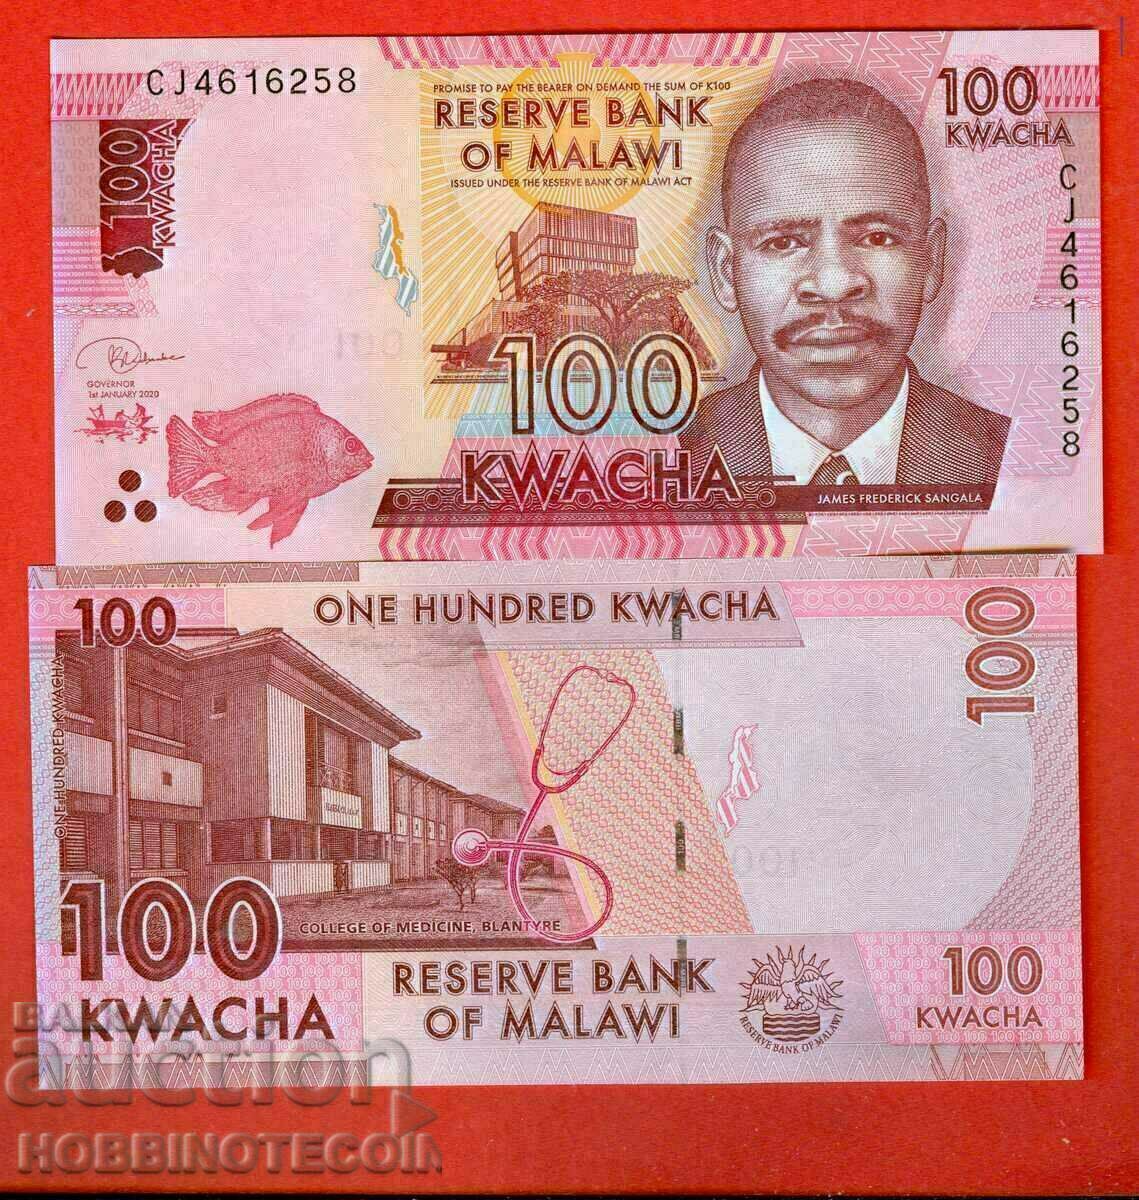 MALAWI MALAWI - 100 Kwacha - issue 2020 - NEW UNC